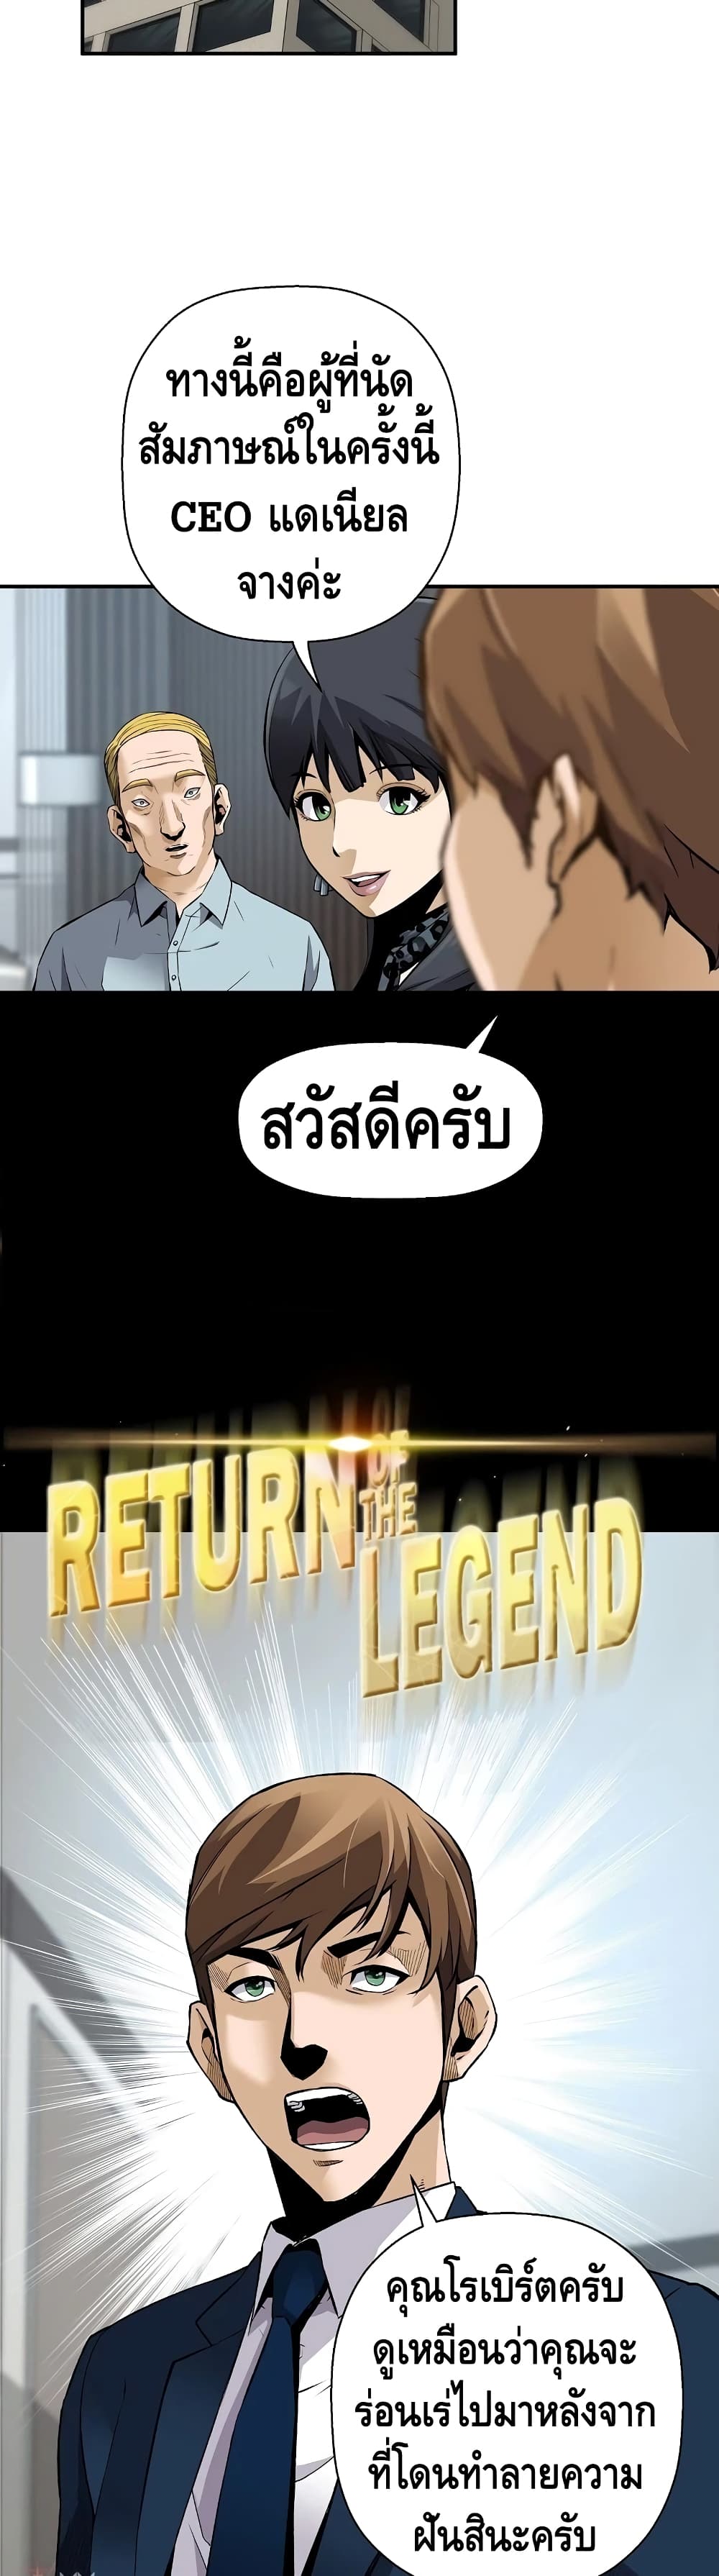 Return of the Legend 40 แปลไทย